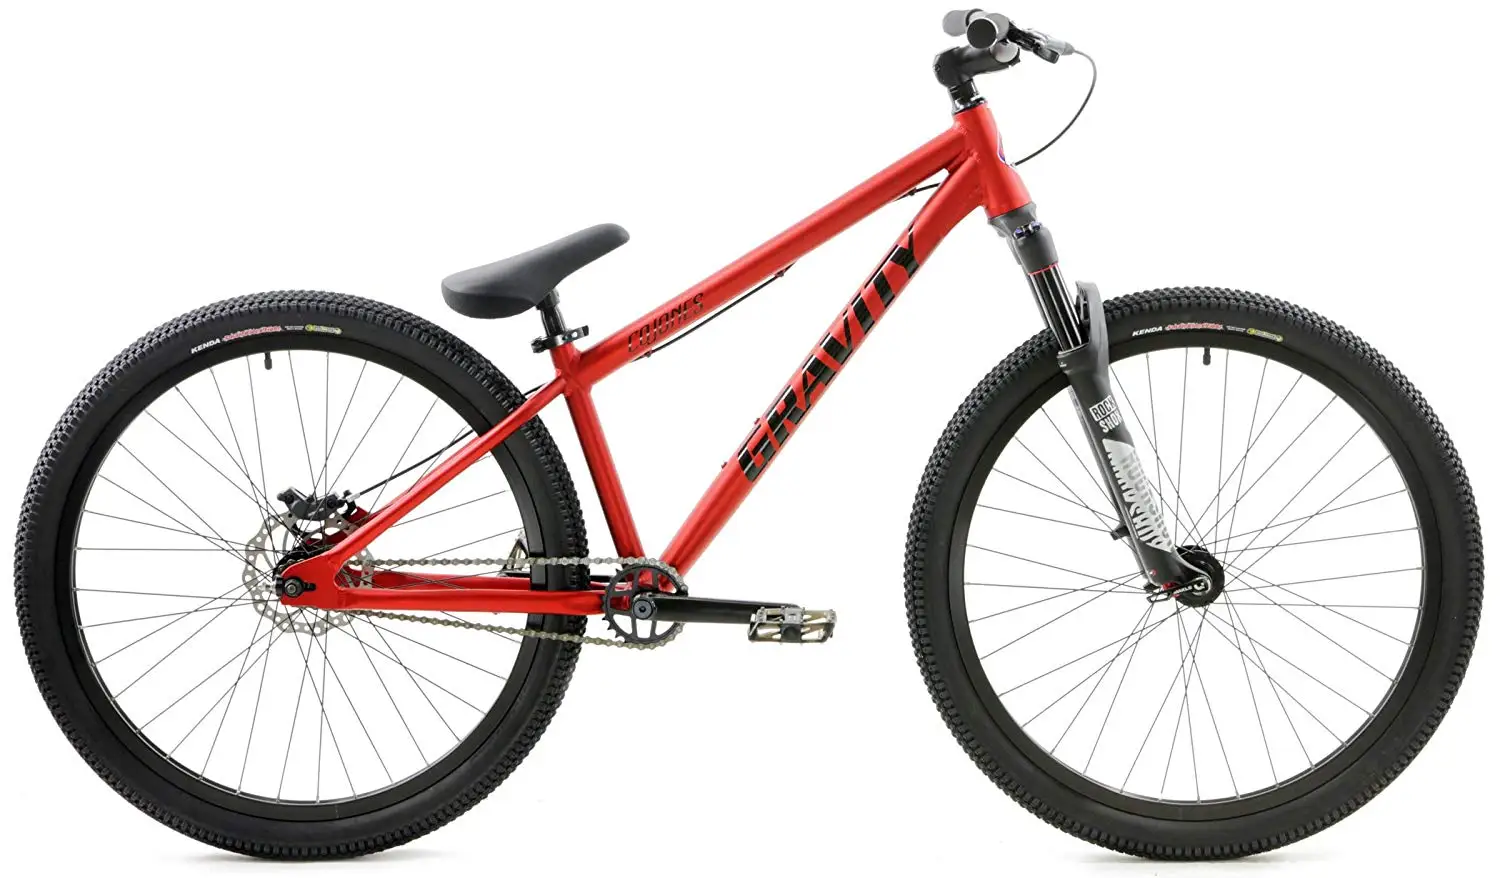 26 inch dirt jumper bikes for sale